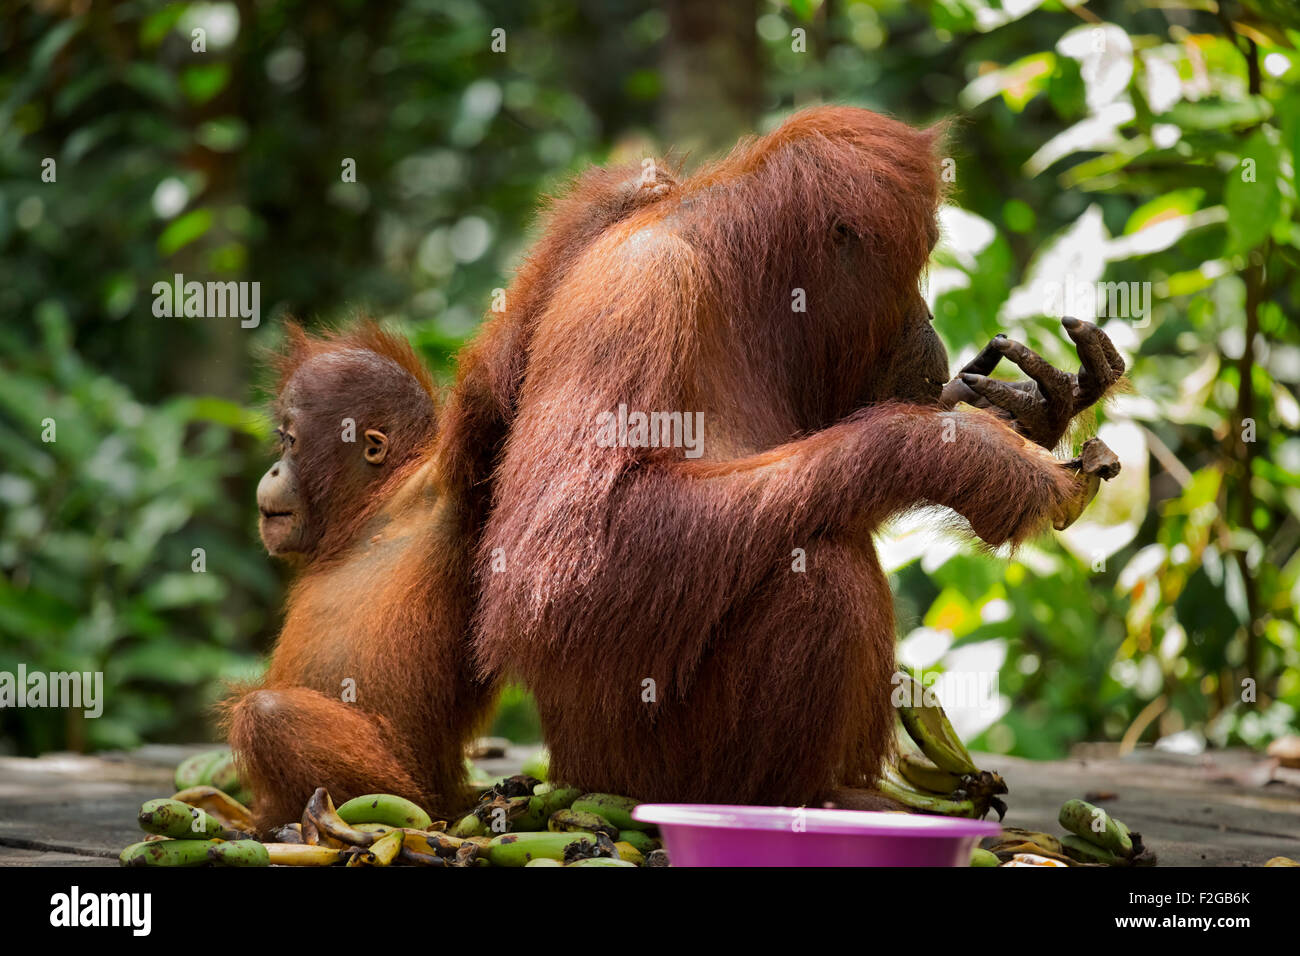 Orangutan Mother and Child at feeding station Stock Photo